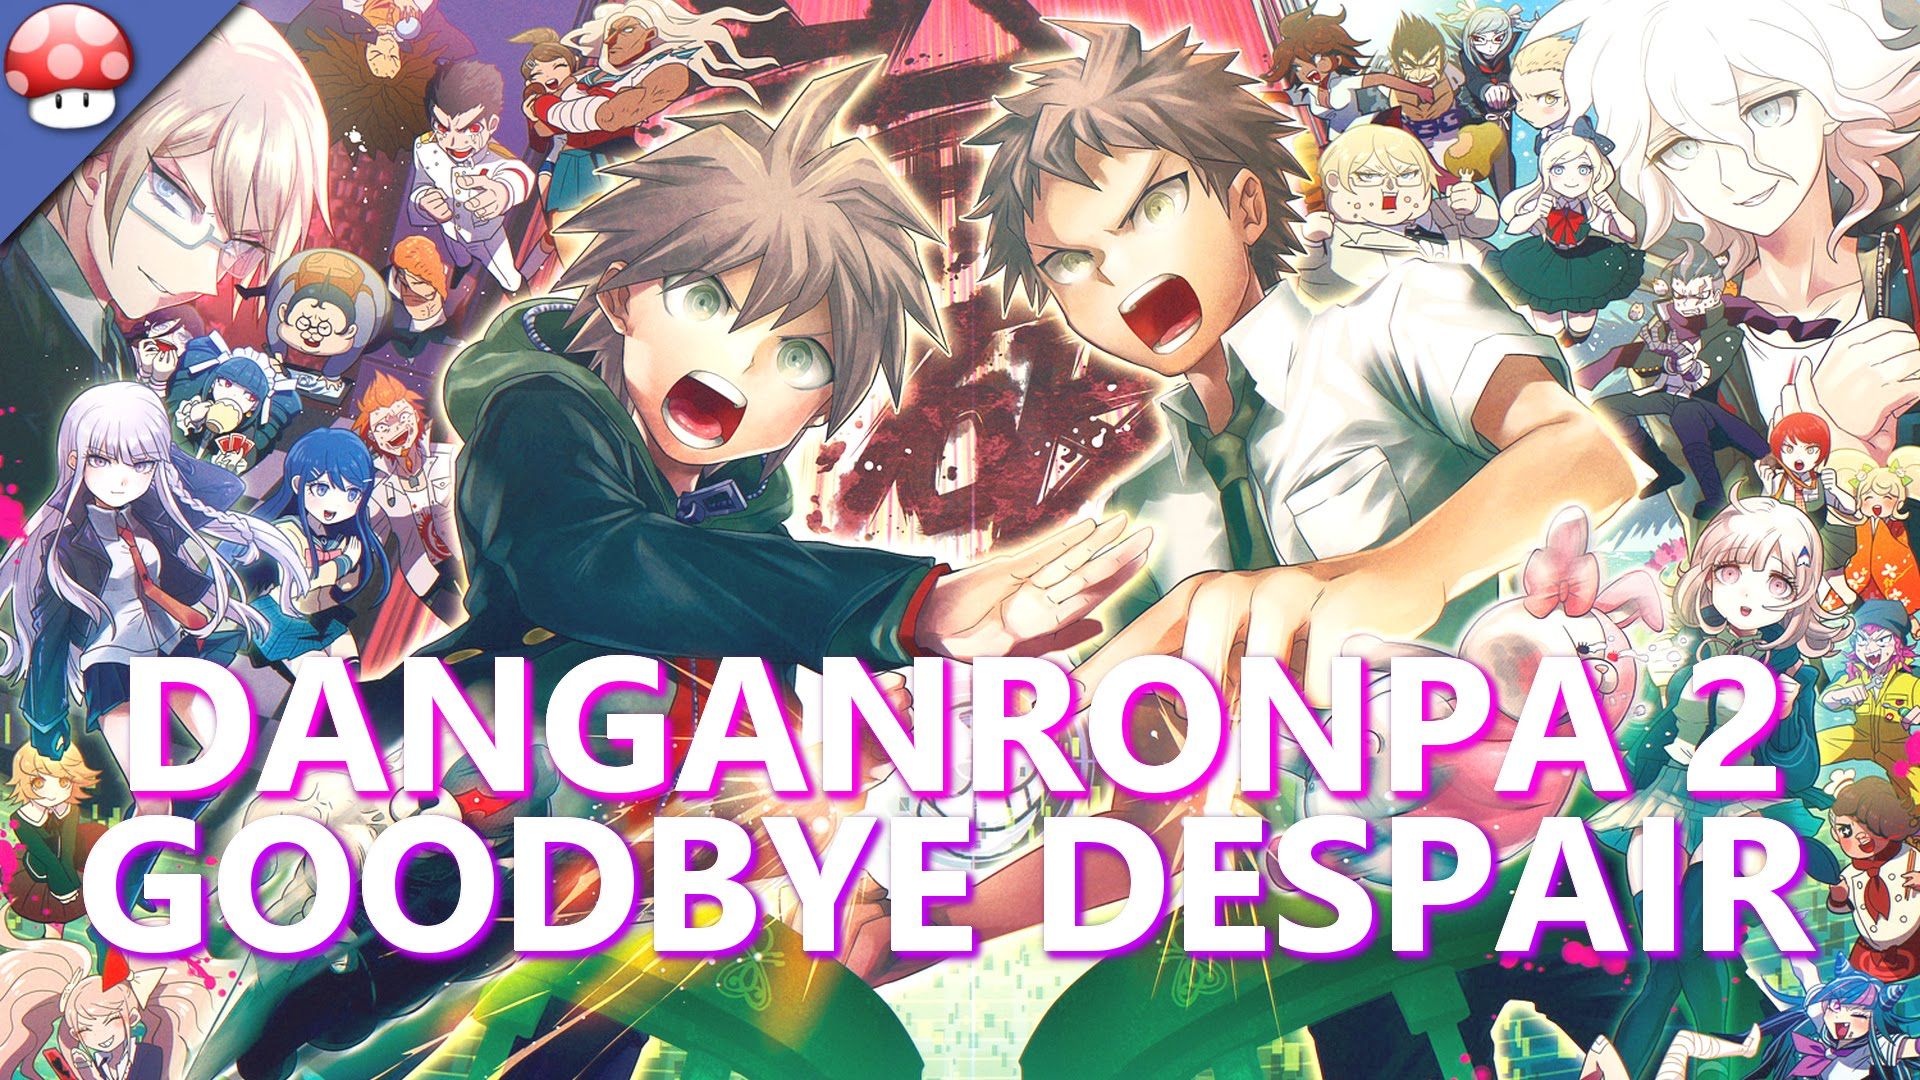 Danganronpa 2: Goodbye Despair HD Wallpaperwallpaper.net